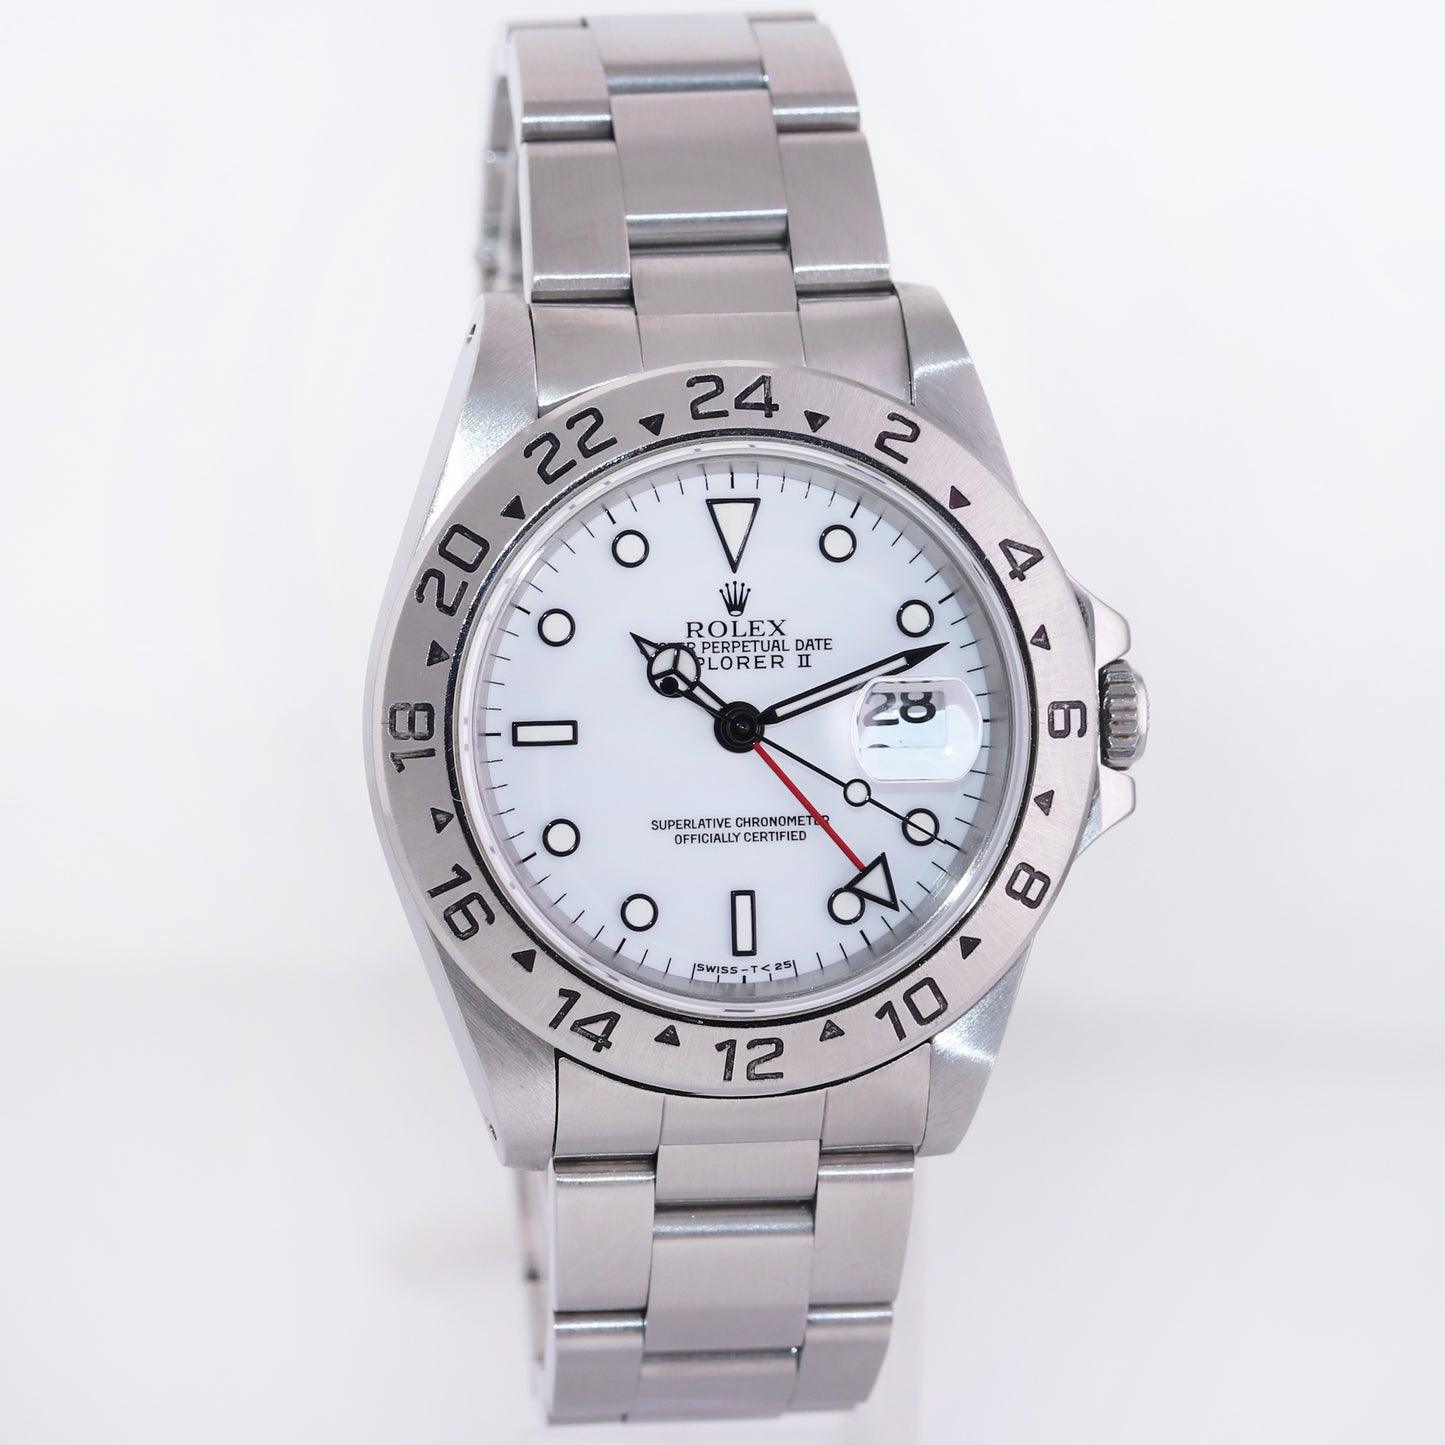 UNPOLISHED Rolex Explorer 2 II 16570 Stainless Steel White Polar Tritium Dial GMT 40mm Watch Box